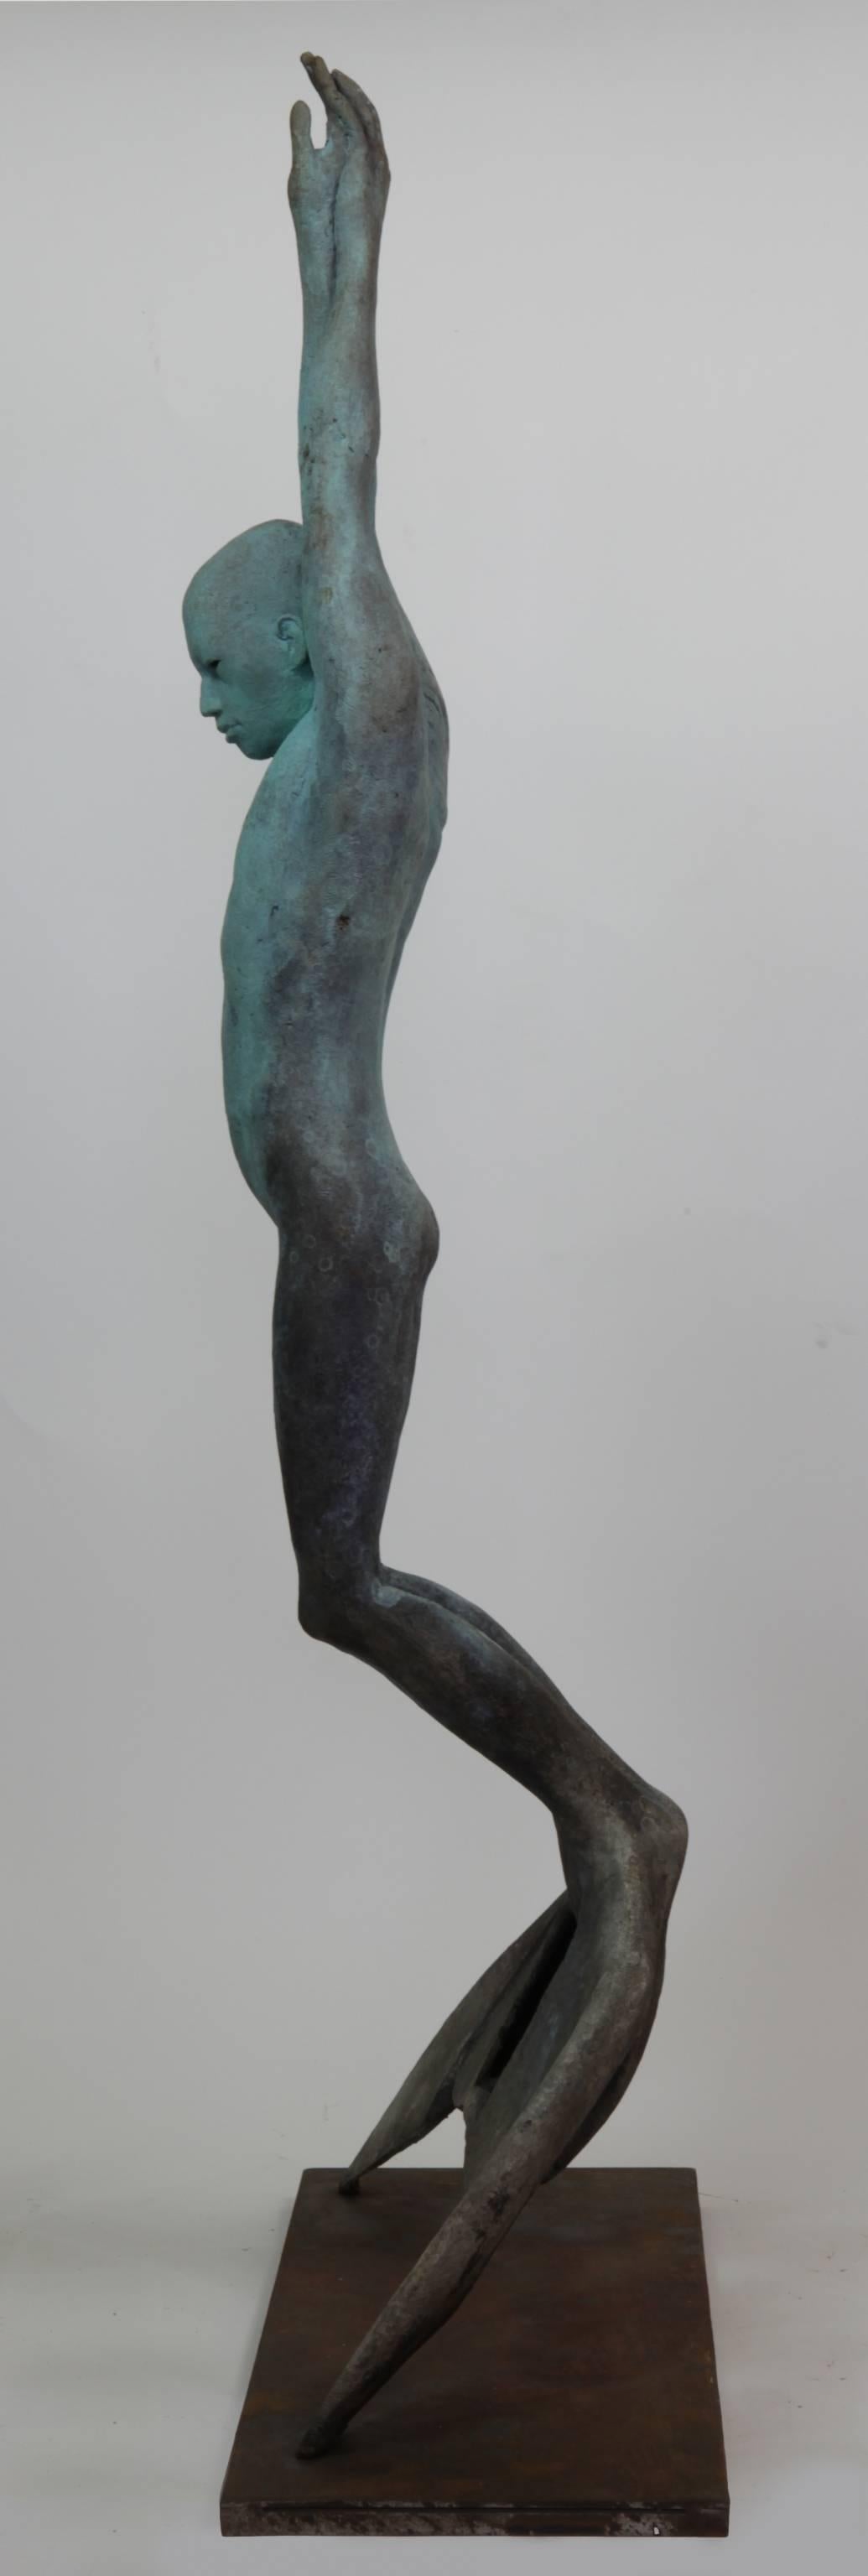 Triton - Contemporary Sculpture by Jesus Curia Perez